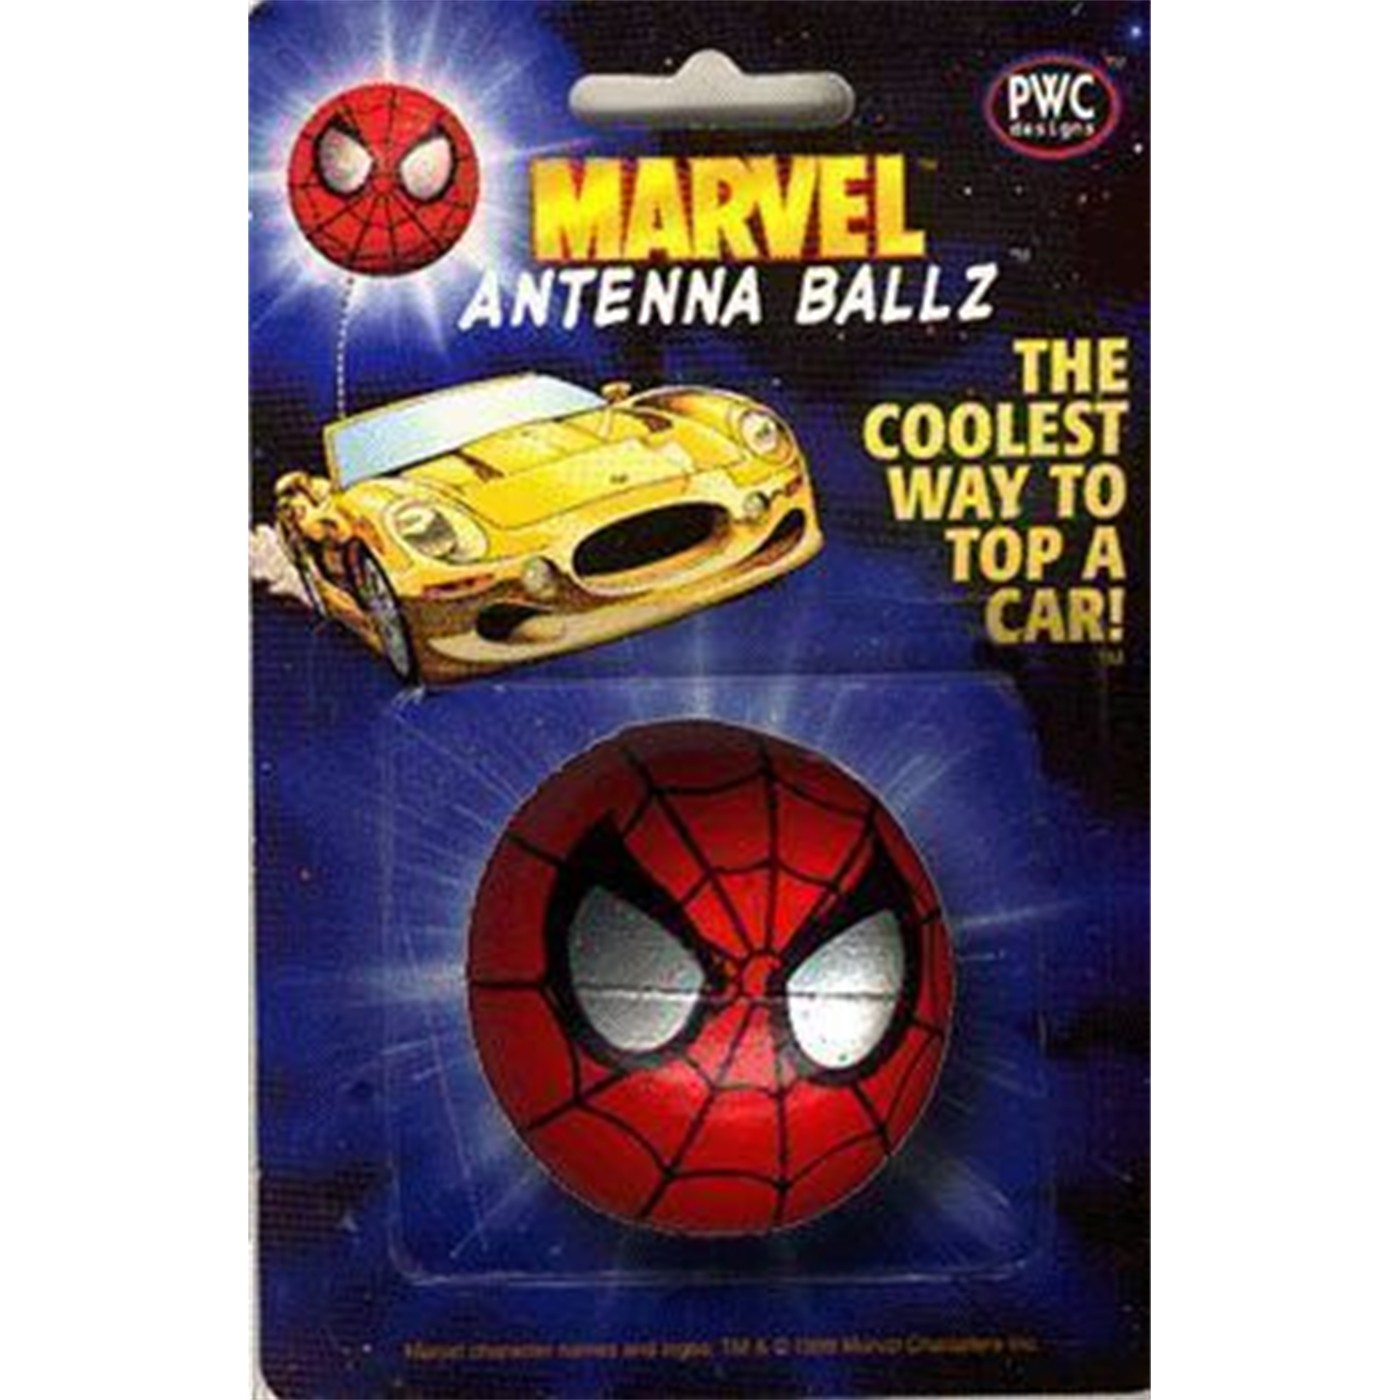 Spiderman Antenna Ball